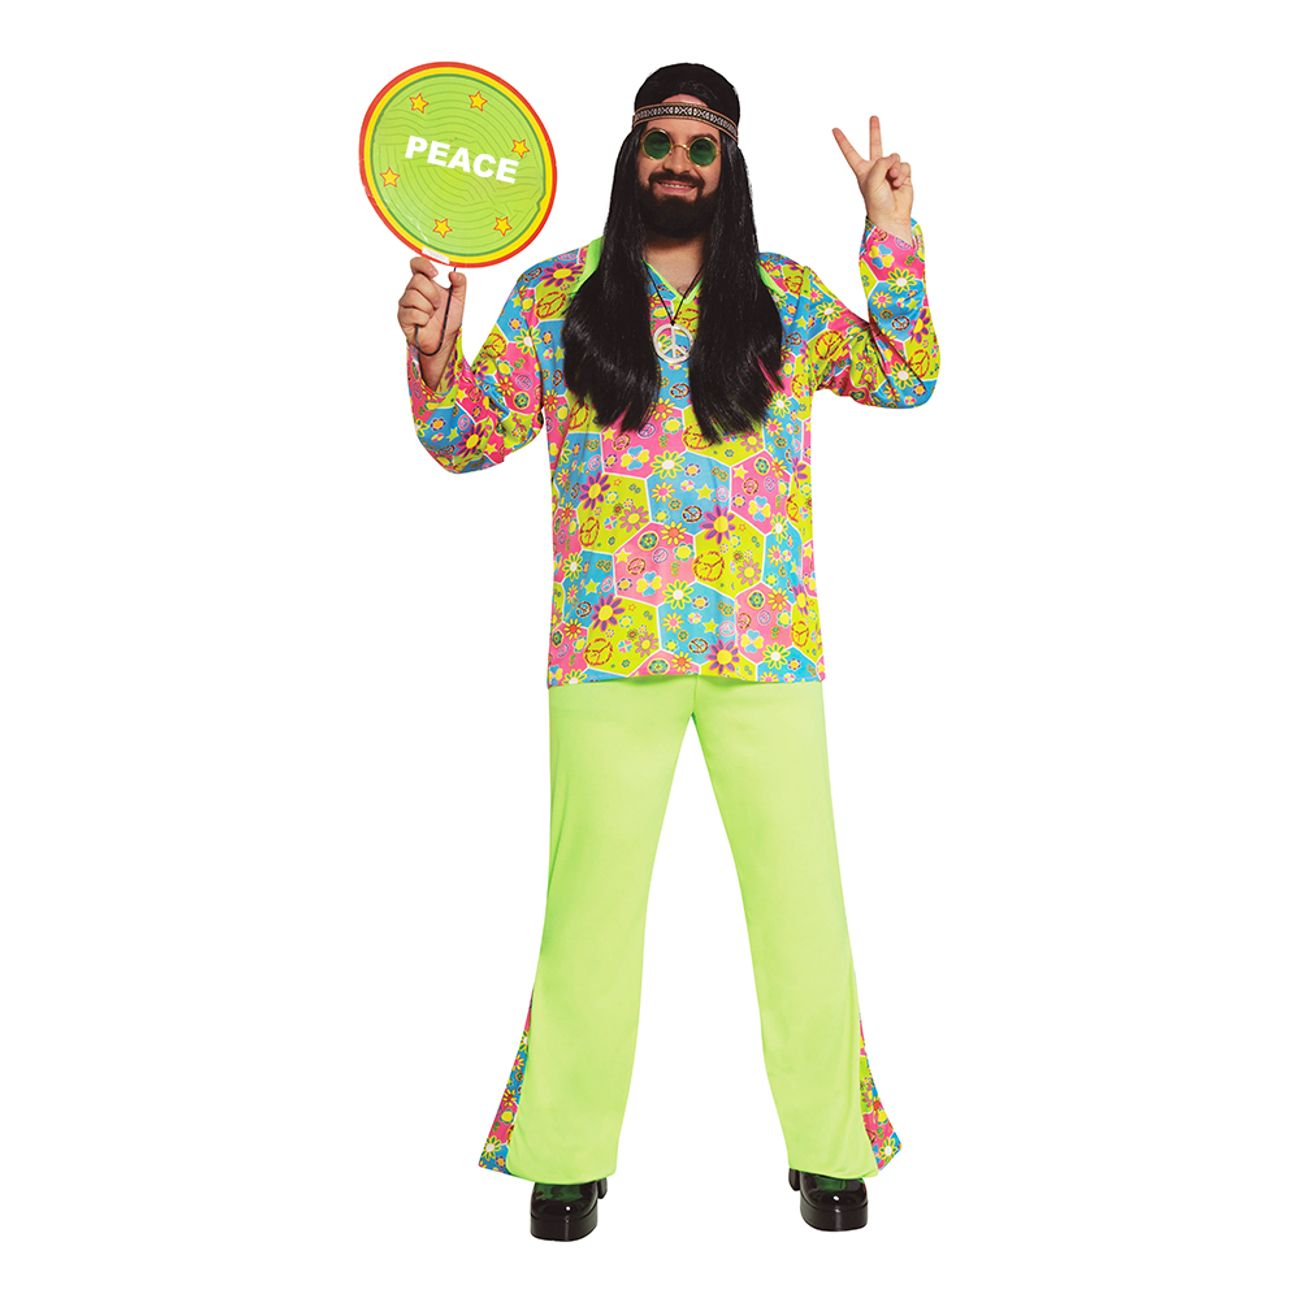 60-tals-hippie-dude-plus-size-maskeraddrakt-76715-1